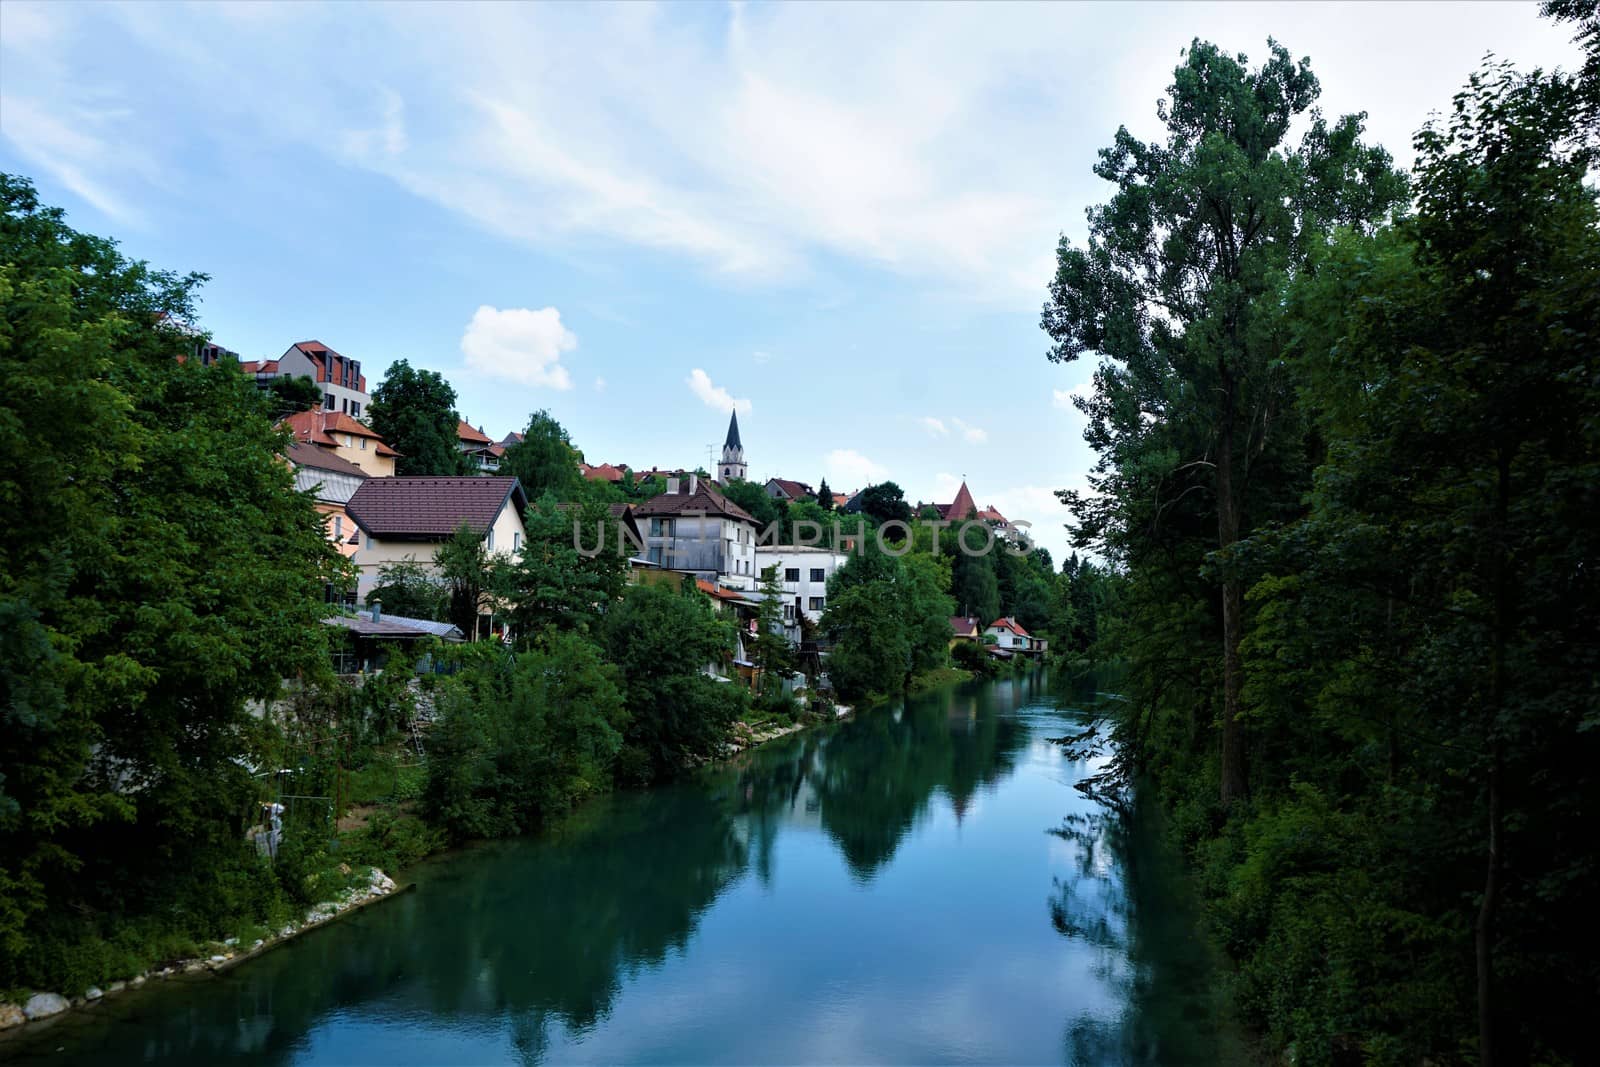 The Sava river and the city of Kranj, Slovenia